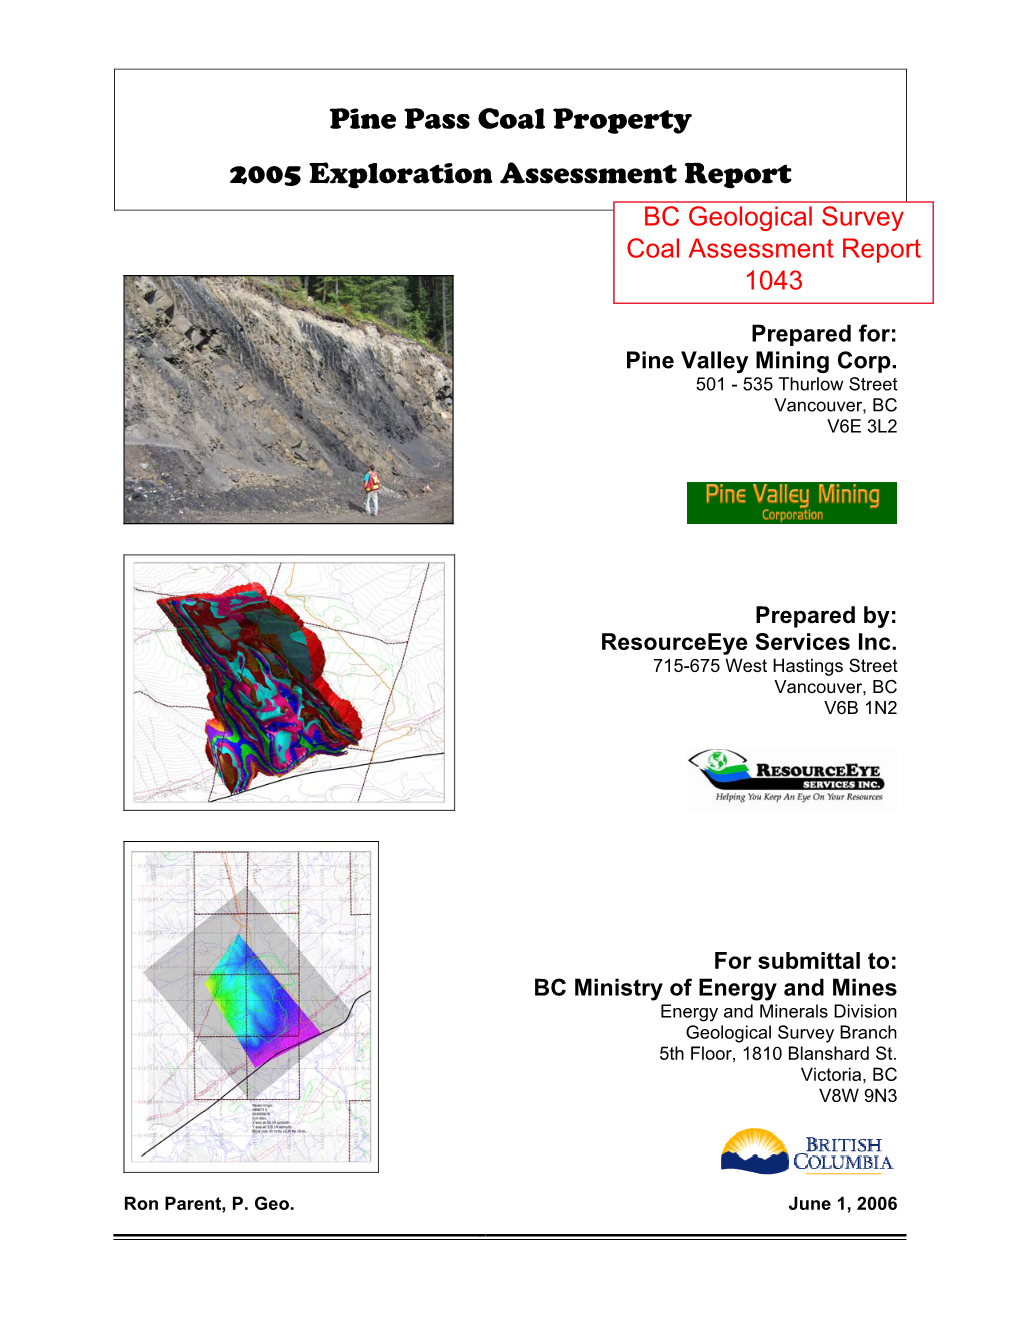 Pine Pass Coal Property 2005 Exploration Assessment Report